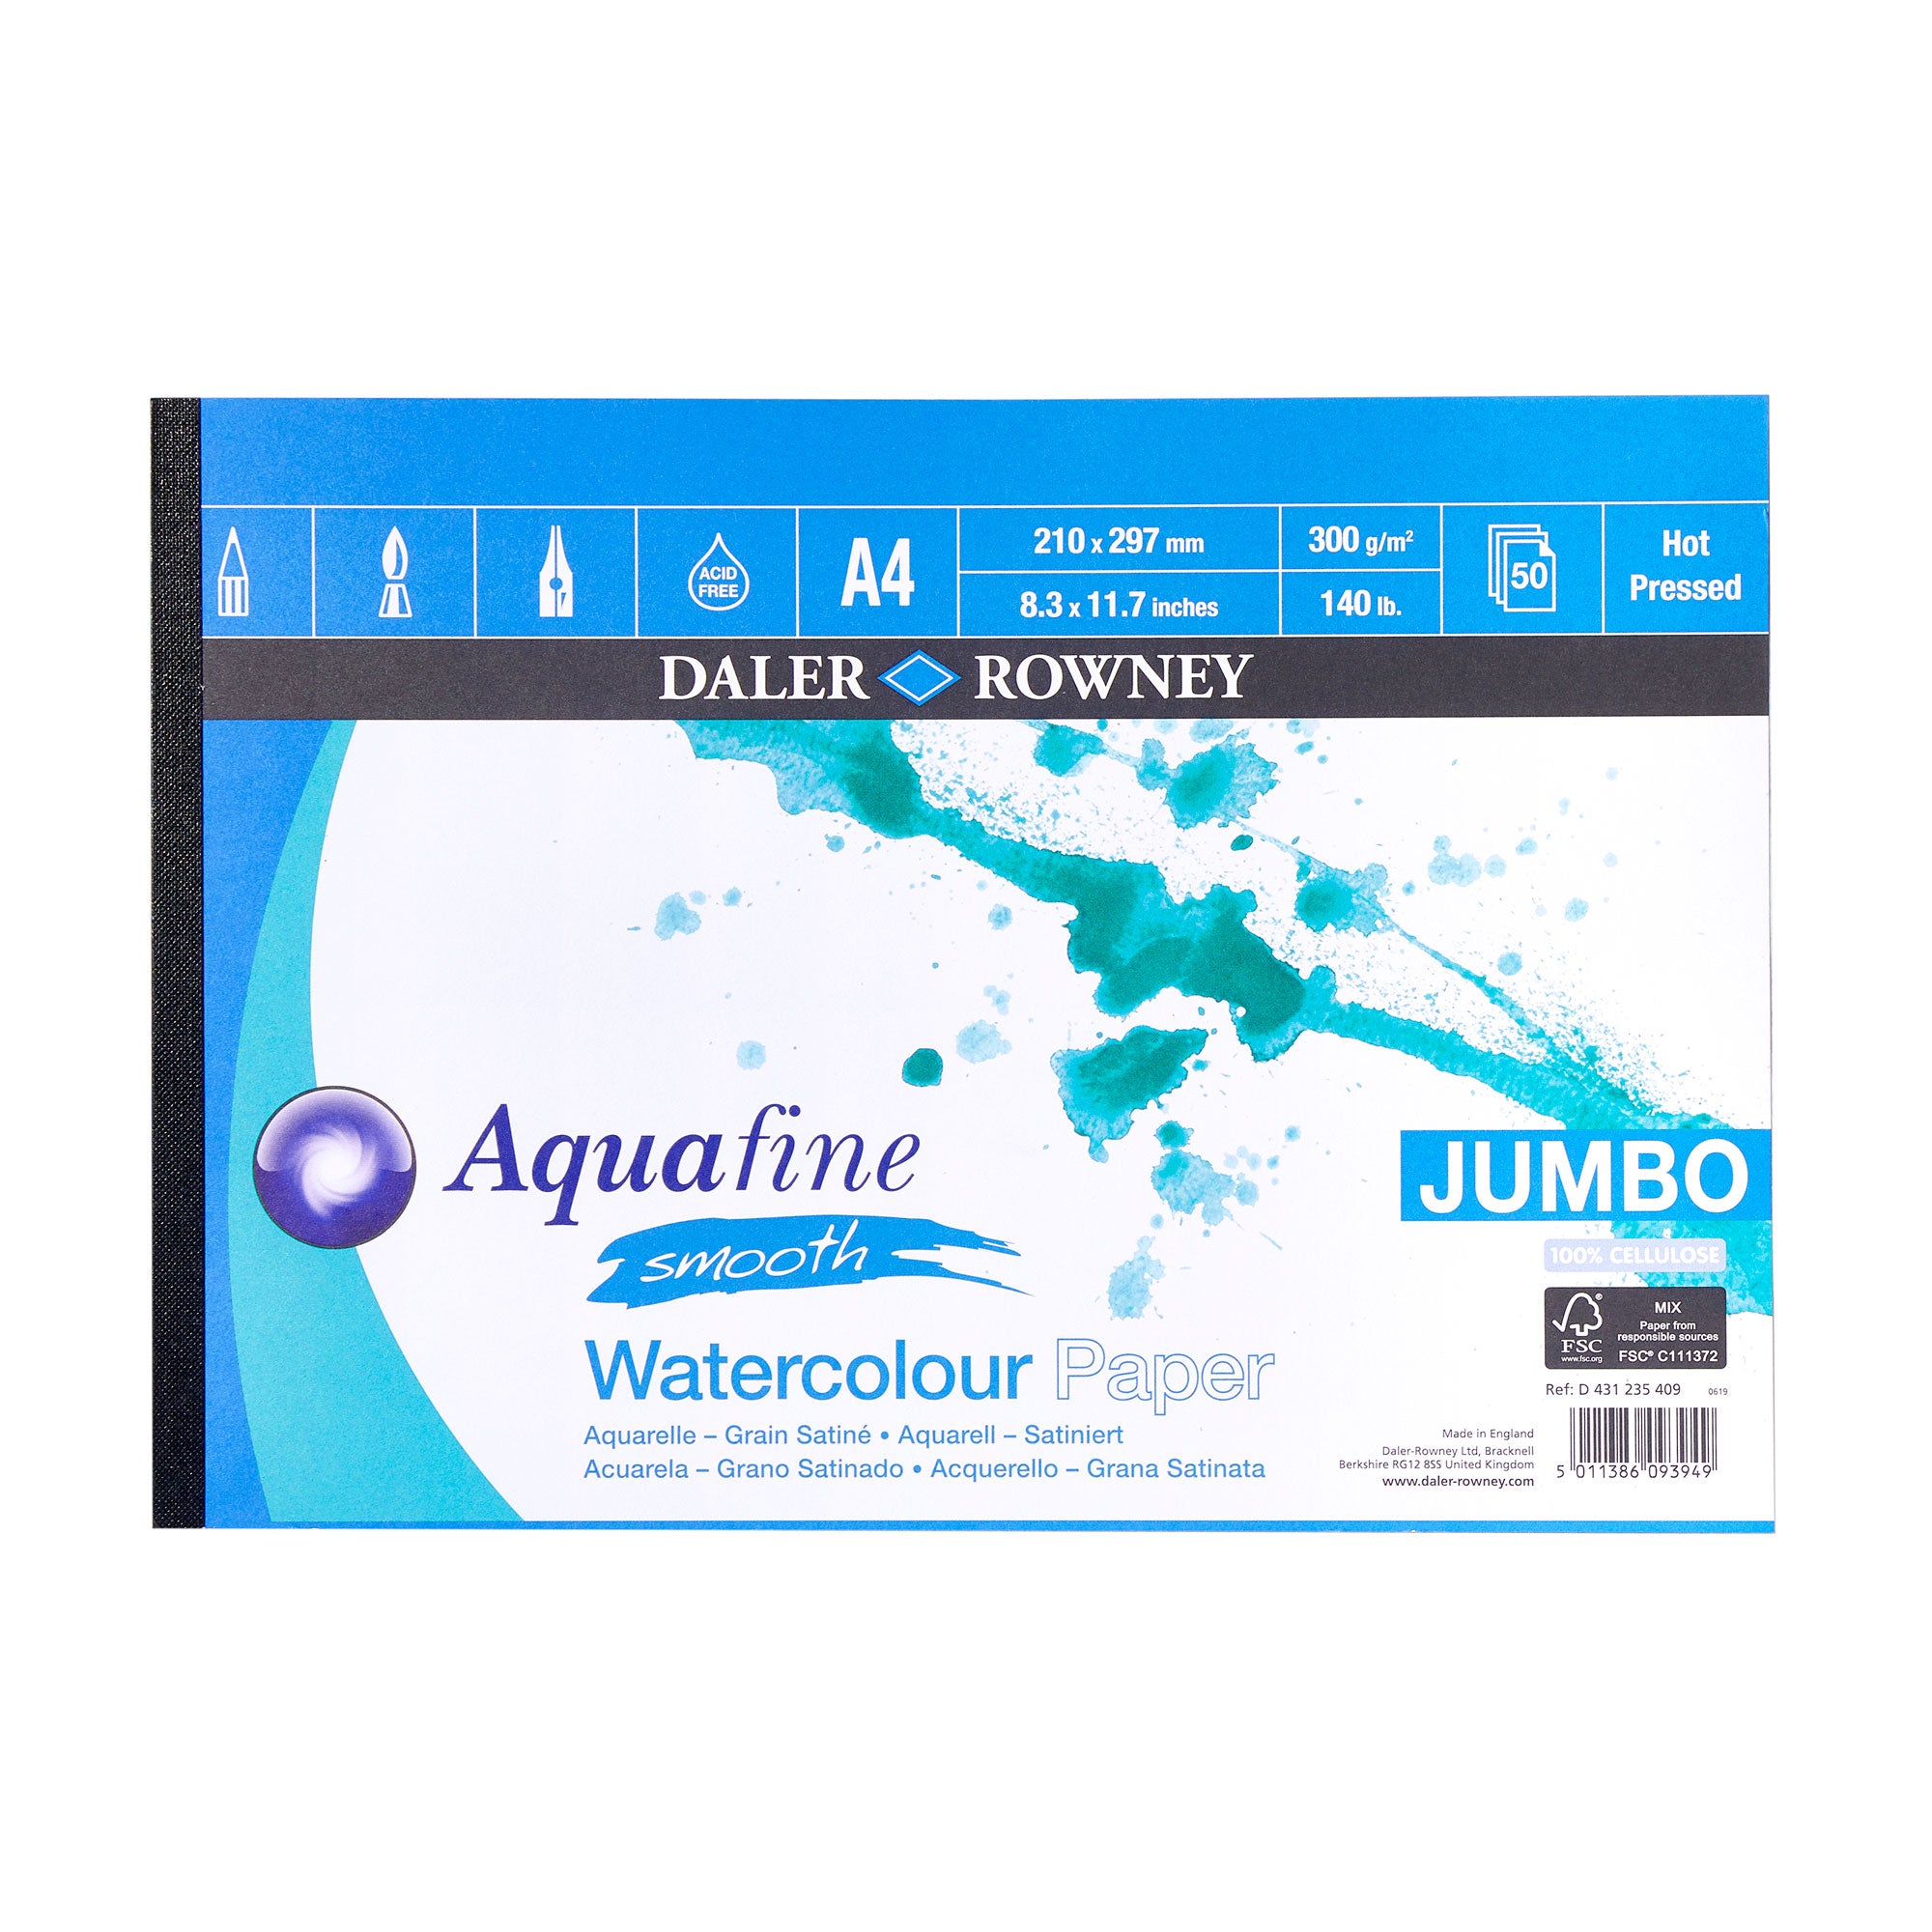 Daler-Rowney Aquafine JUMBO Watercolour Pads - 300gsm (140lb) - HOT PRESSED - A4